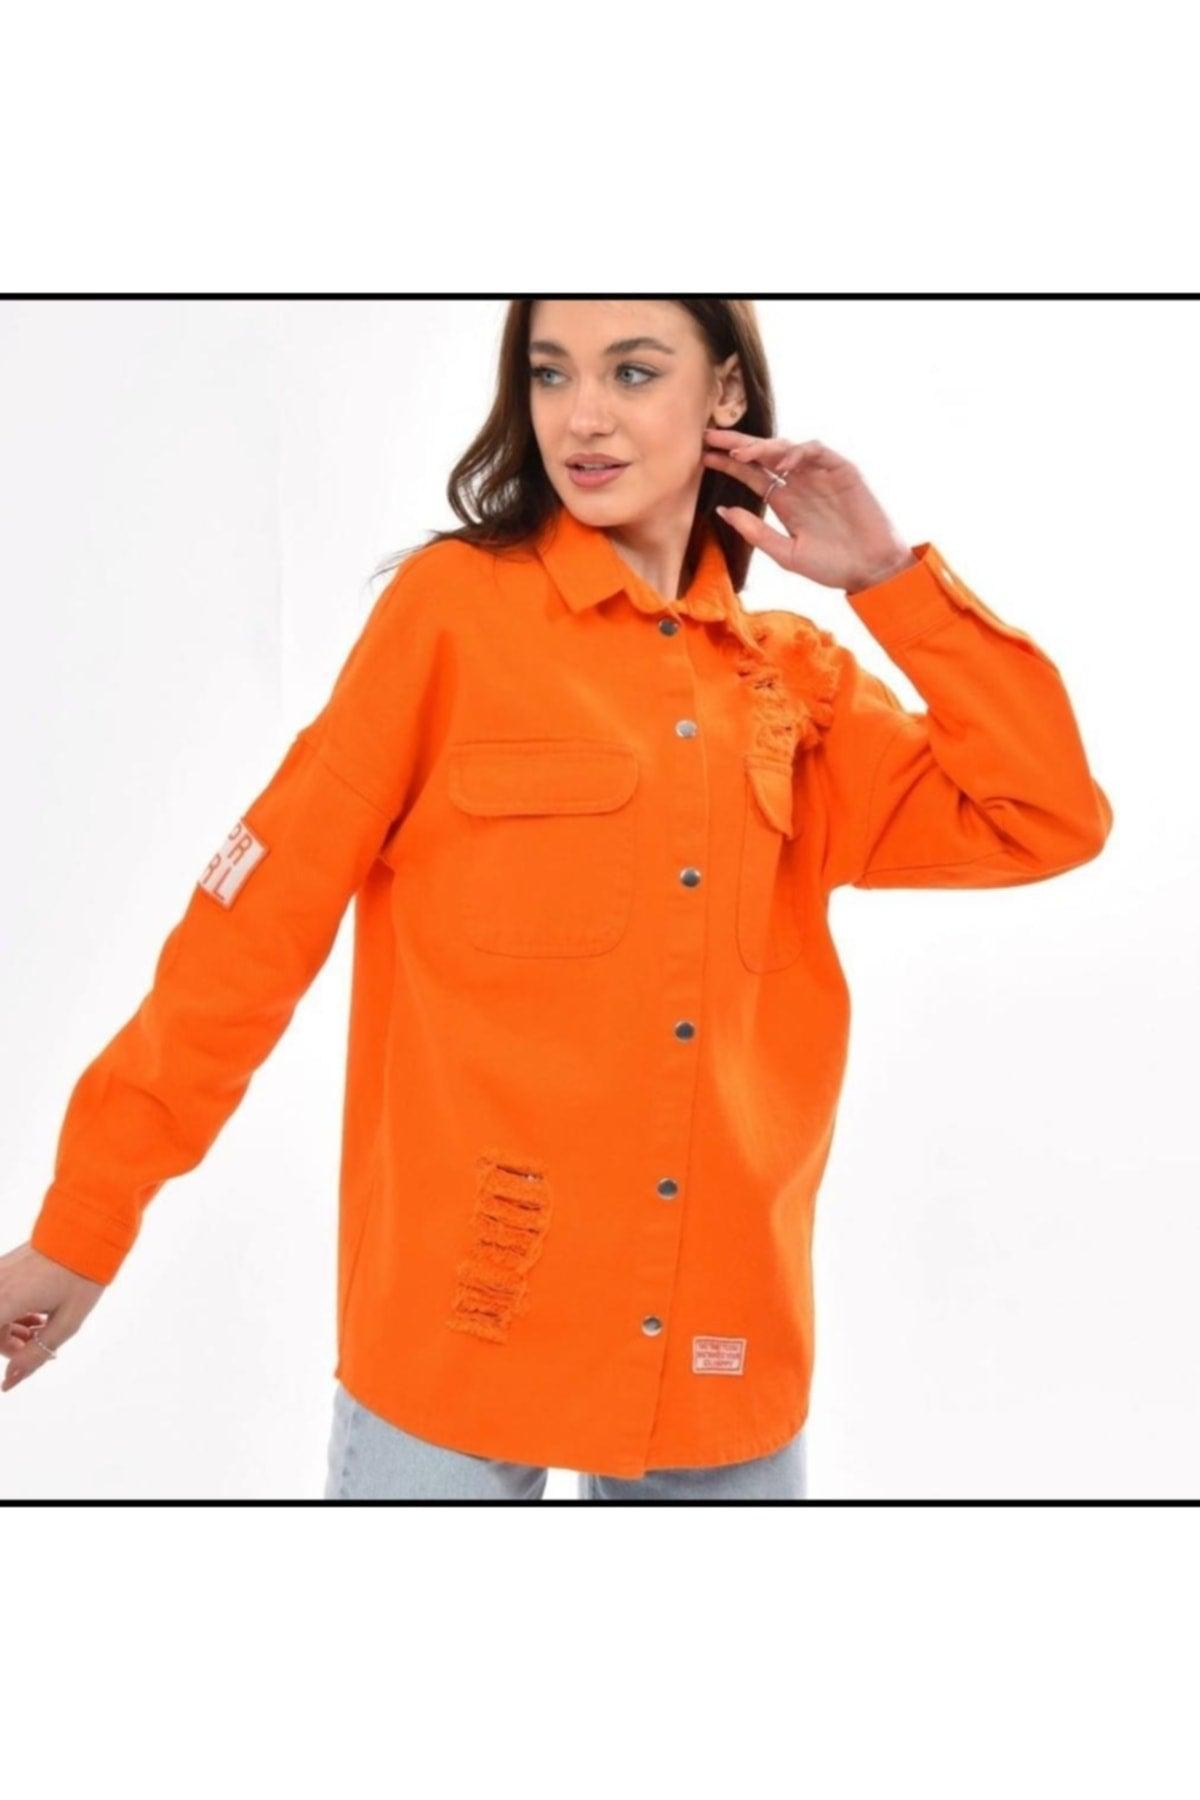 Women's Orange Boyfriend Oversize Worn Denim Jeans Denim Jacket A36-011 - Swordslife